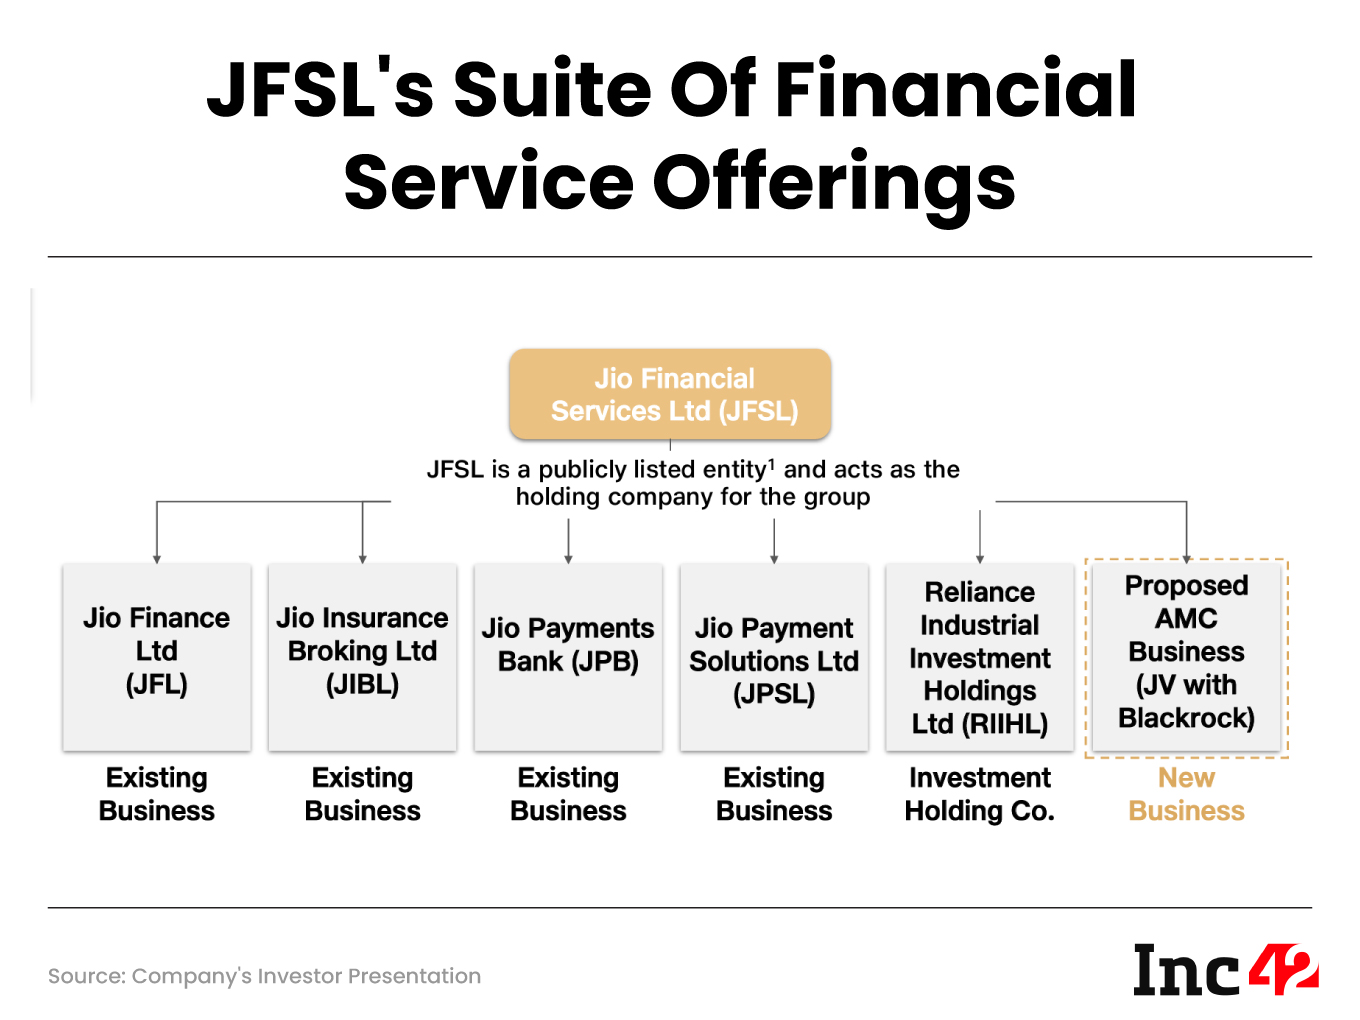 Jio Financial Services' array of fintech businesses